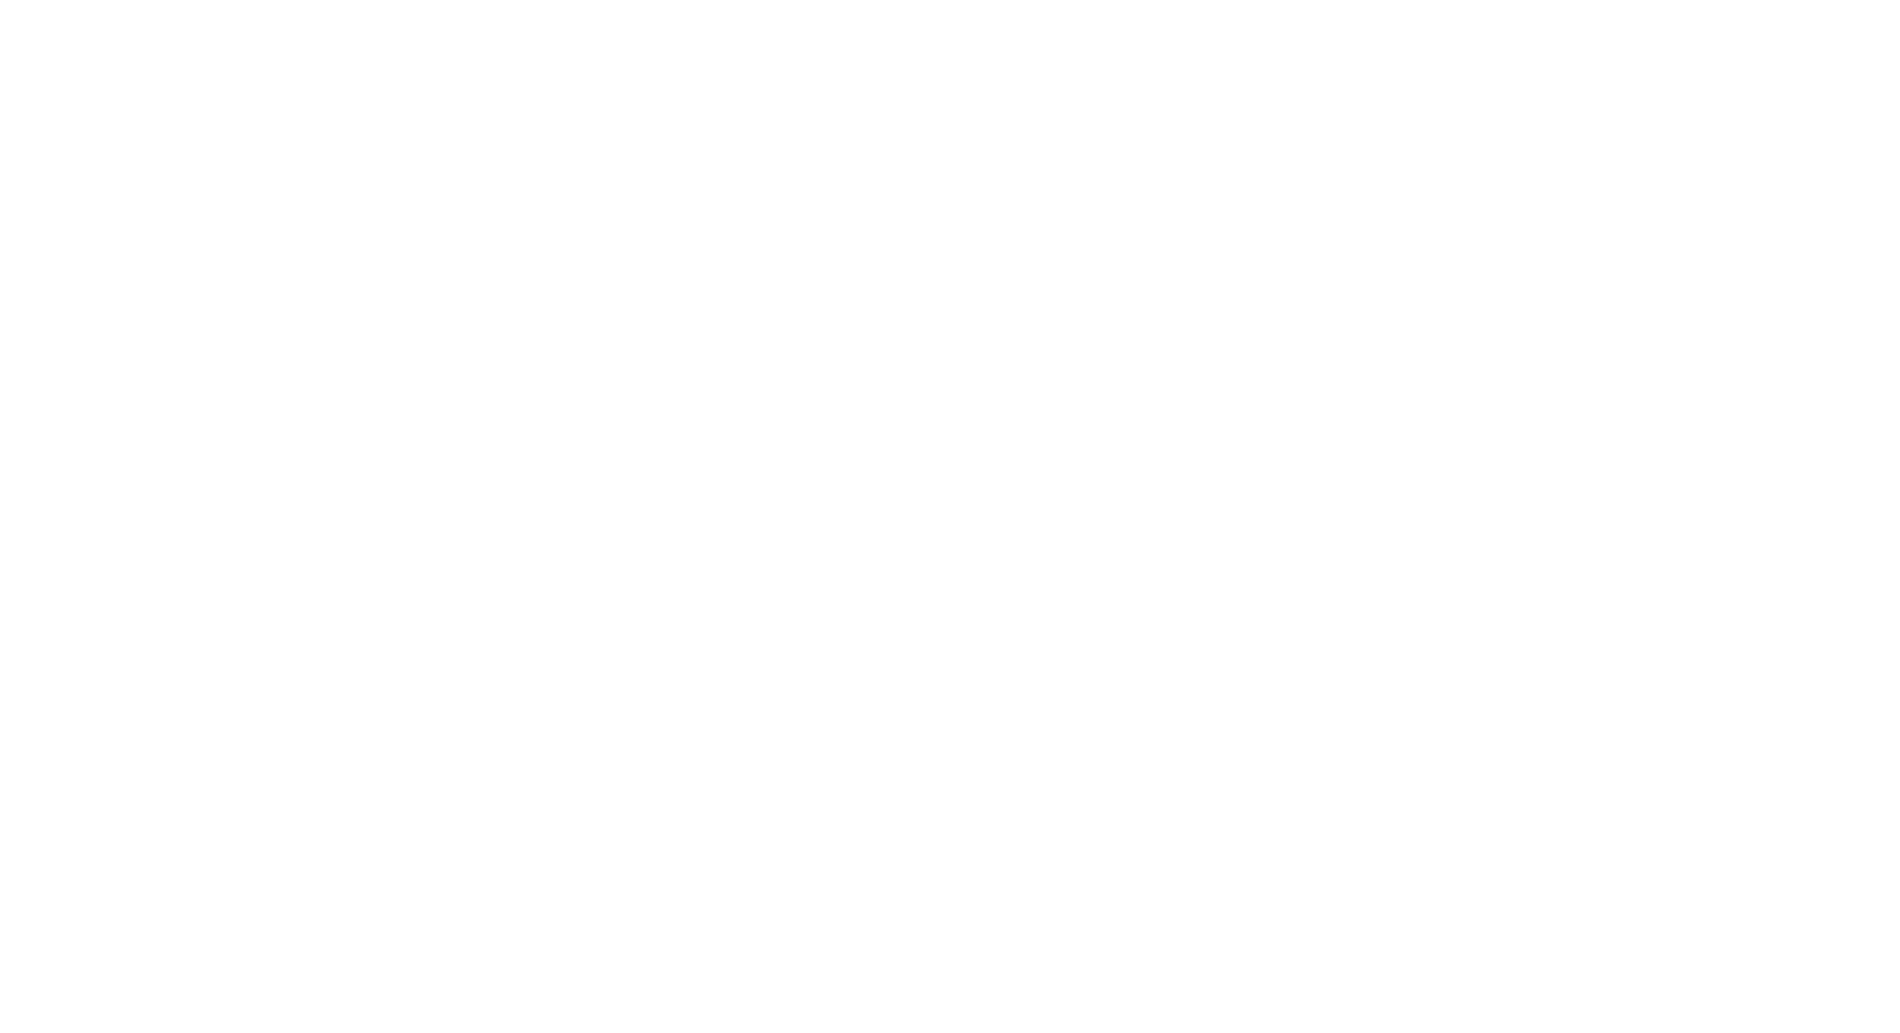 Benahavis Properties logo in white